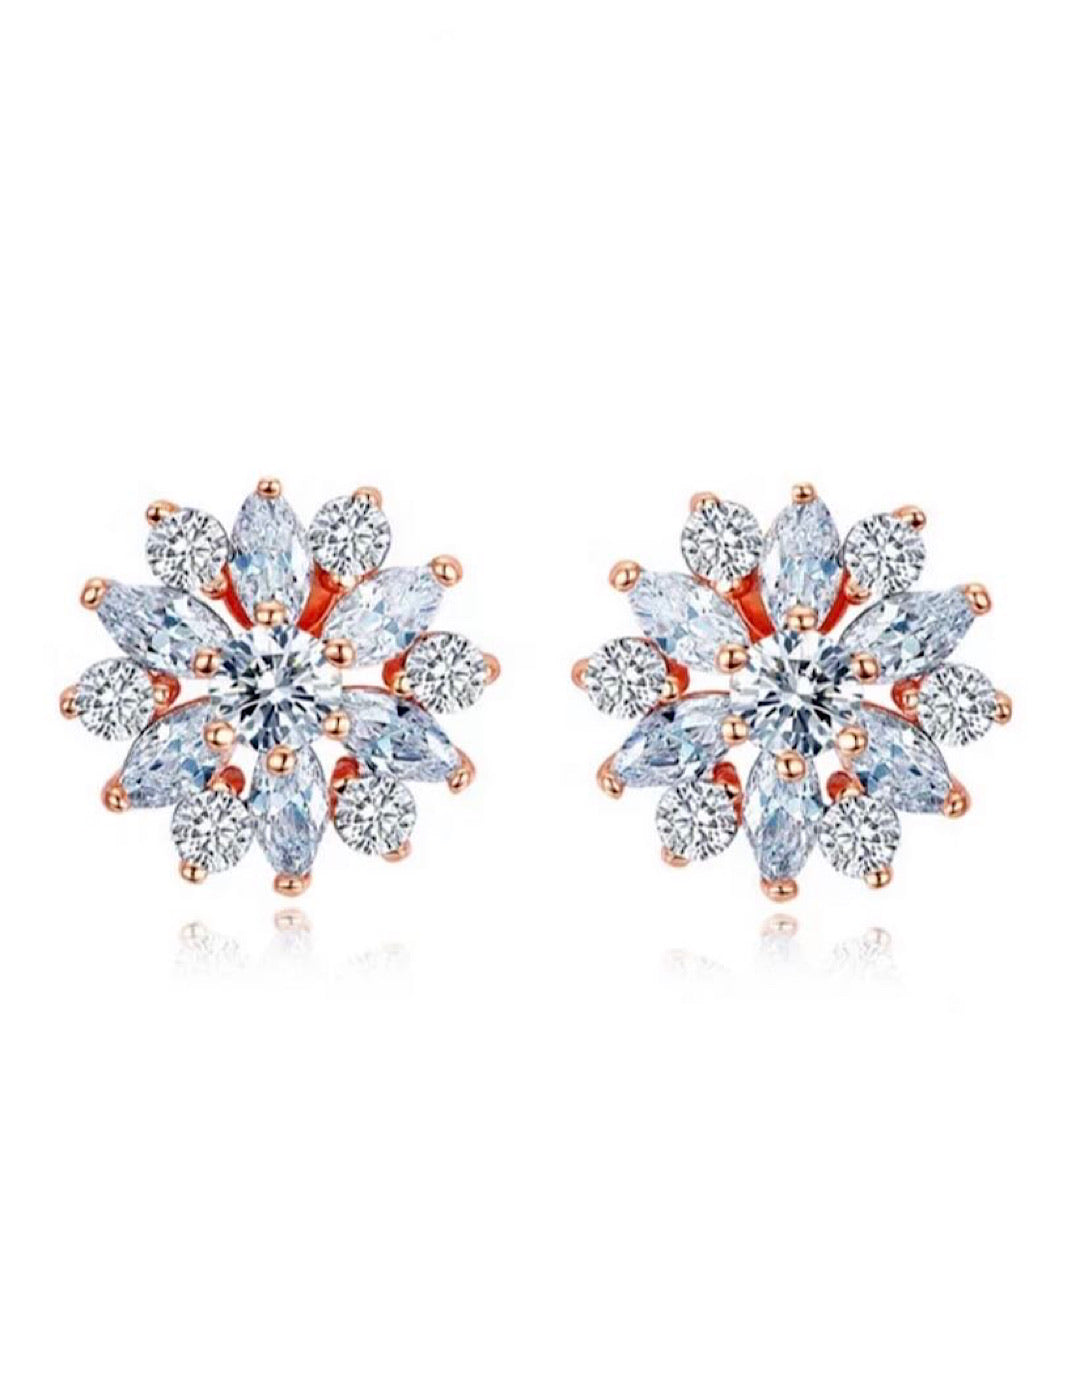 “Bre” Rose Gold Diamond Snowflake Earrings - SLAYBLÉU